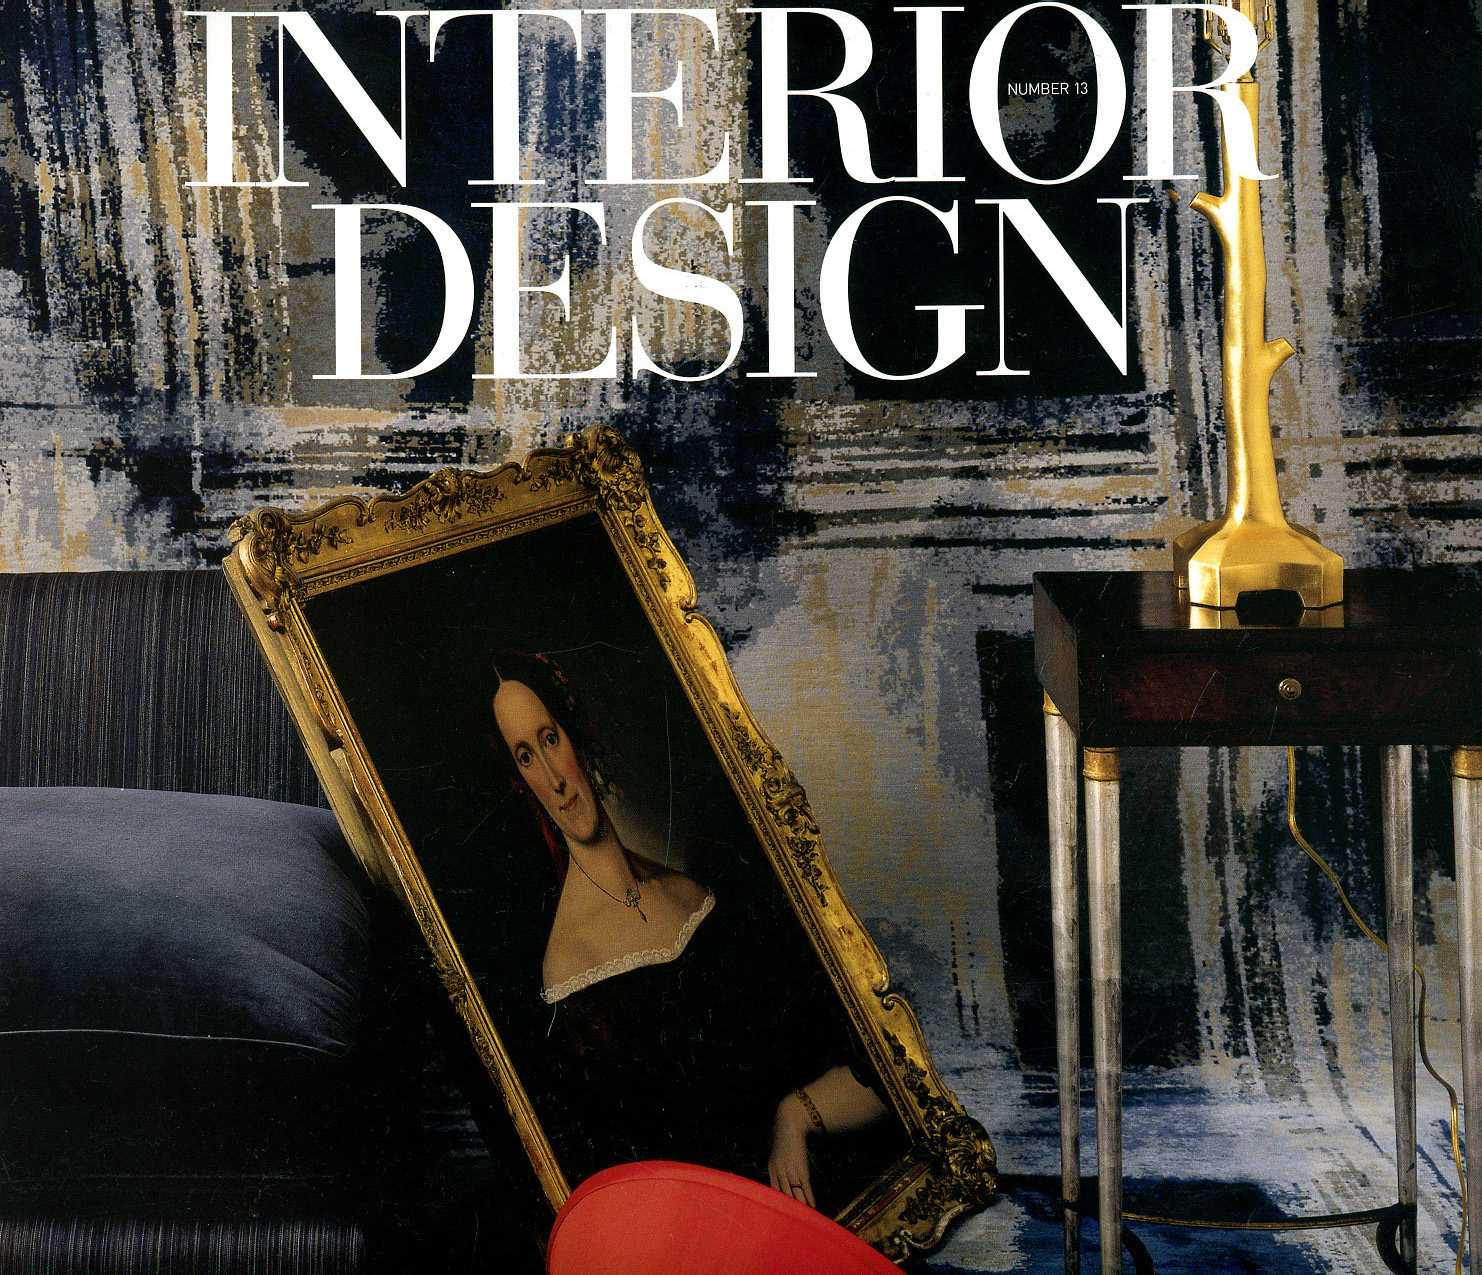 interiordesign.mp1.cover.jpg